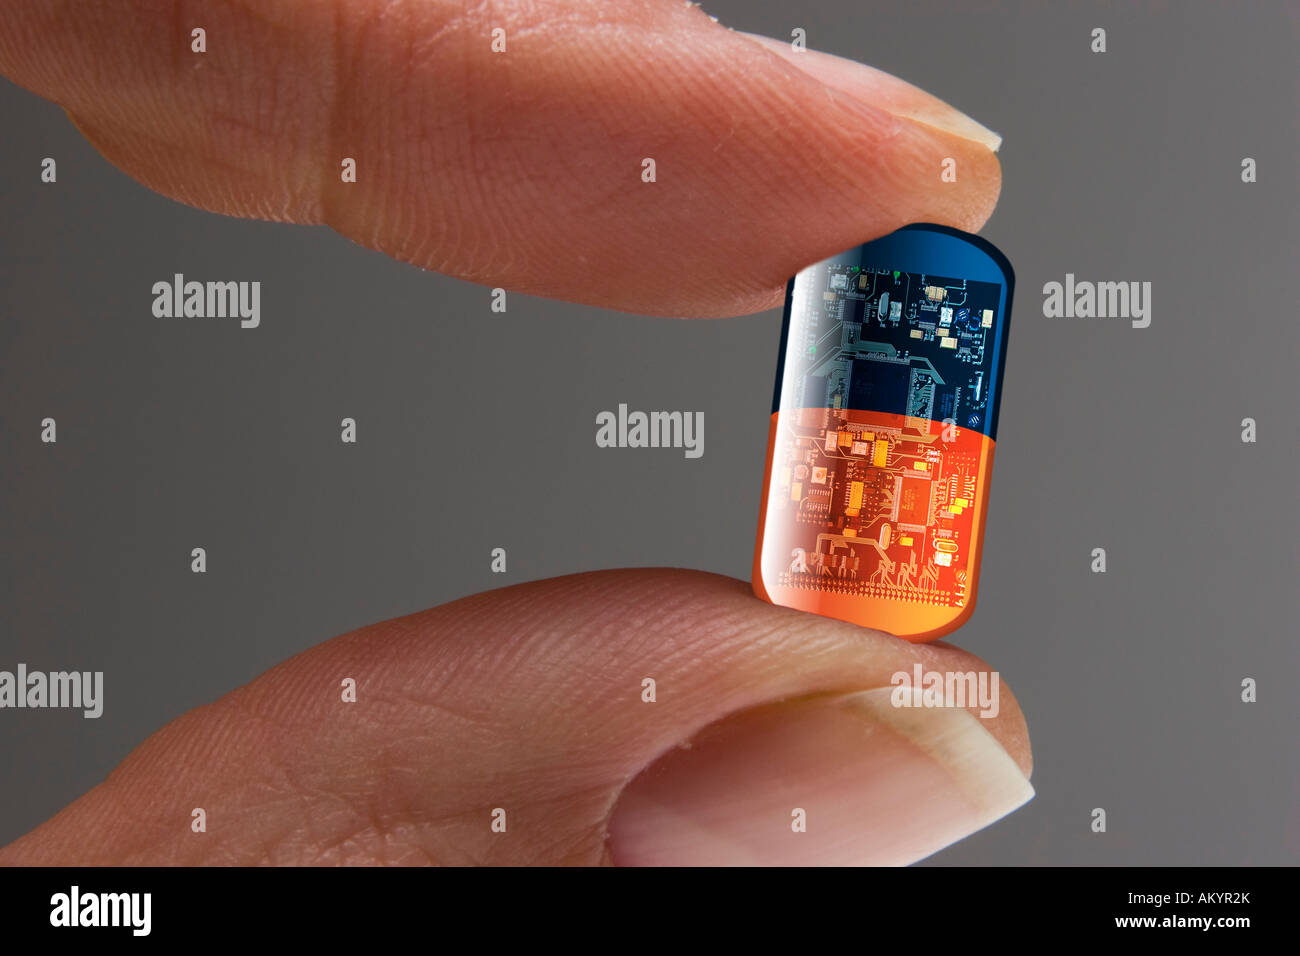 Medicine capsule with chip Stock Photo - Alamy